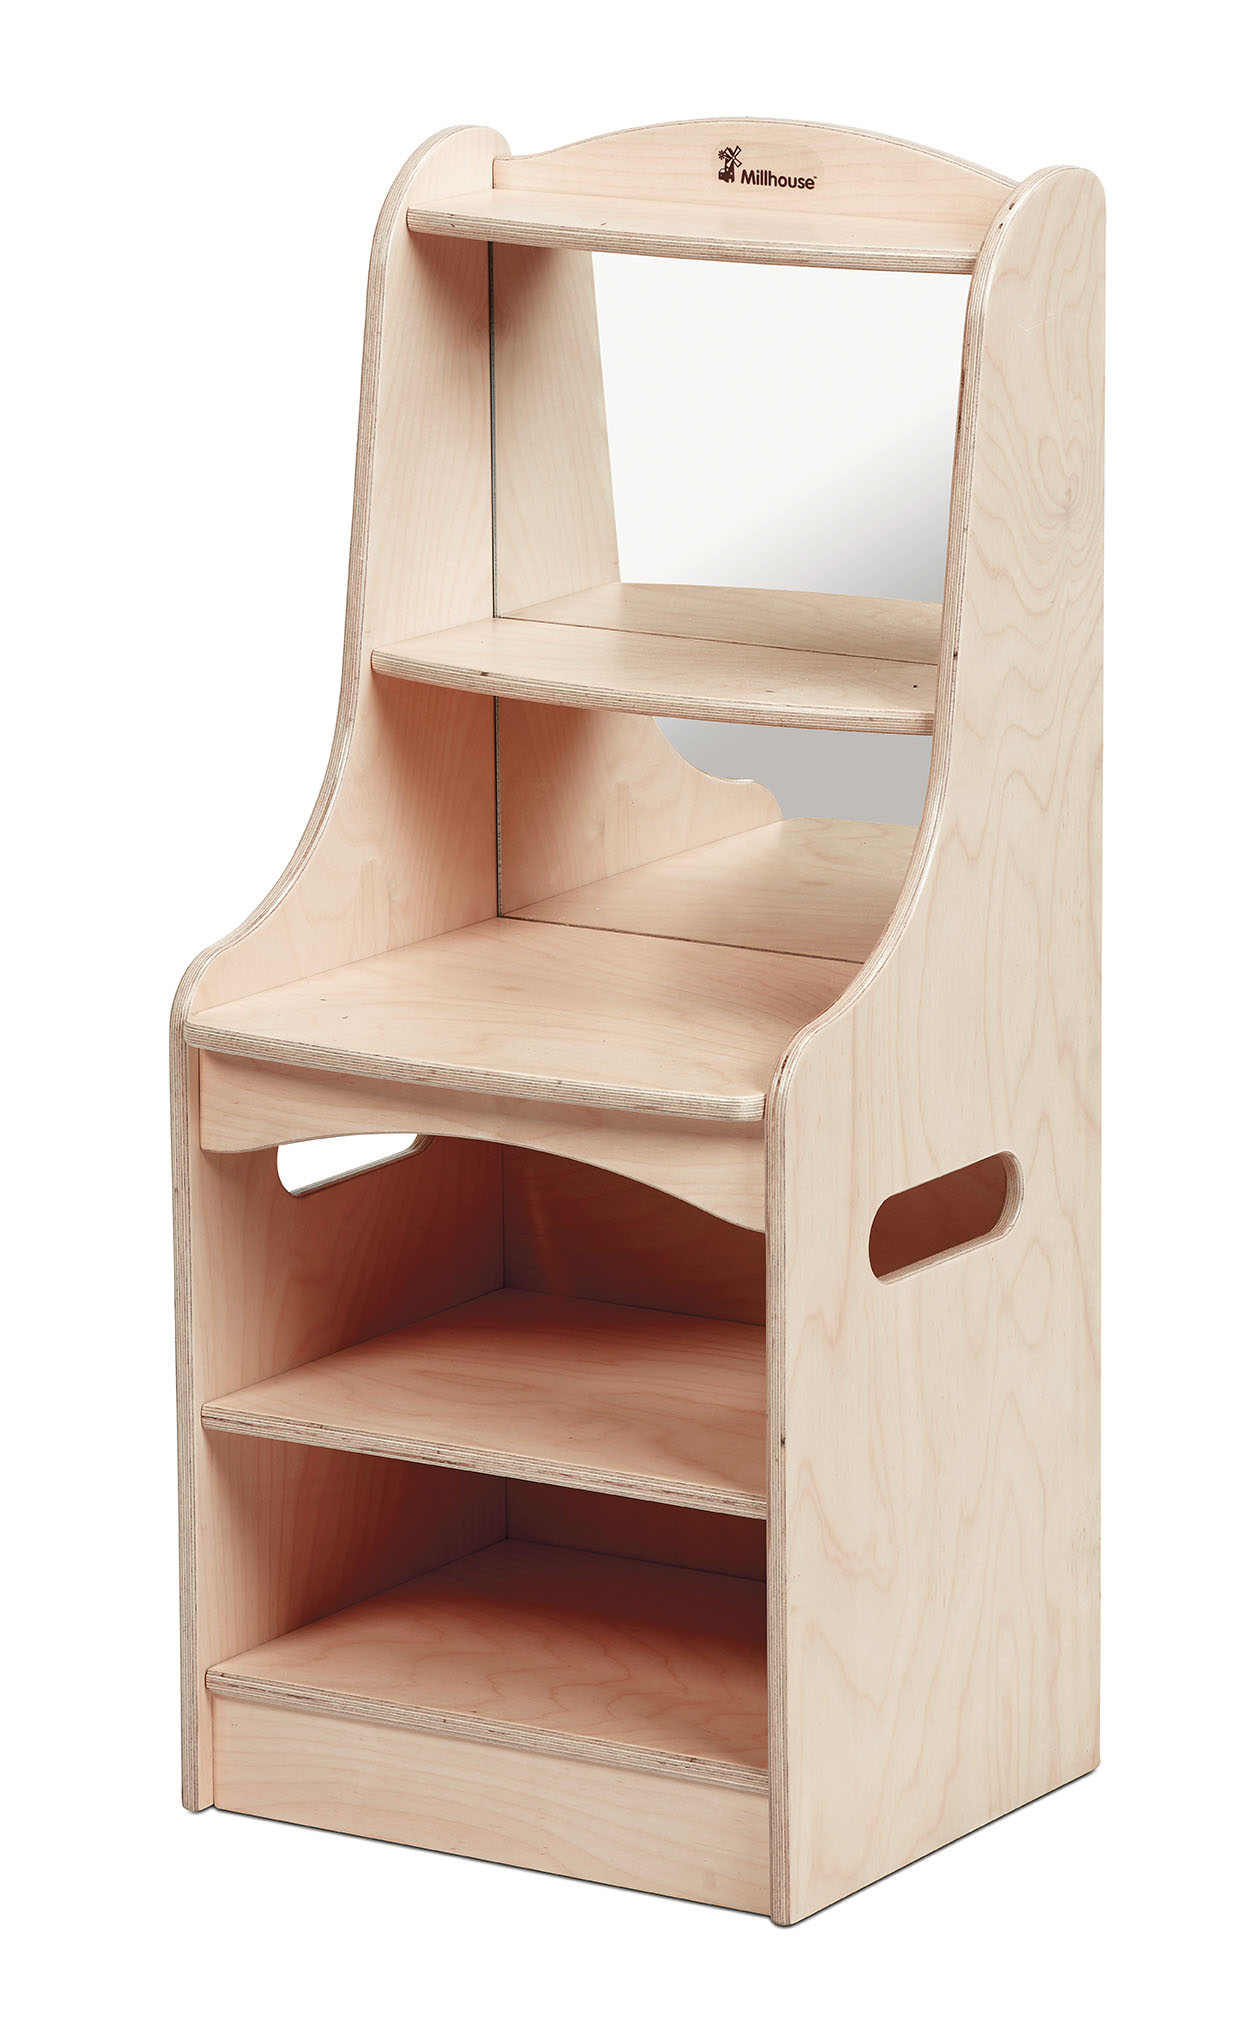 PT209-Millhouse-Early-Years-Furniture-Natural-Storage-Dresser_Main_RGB.jpg